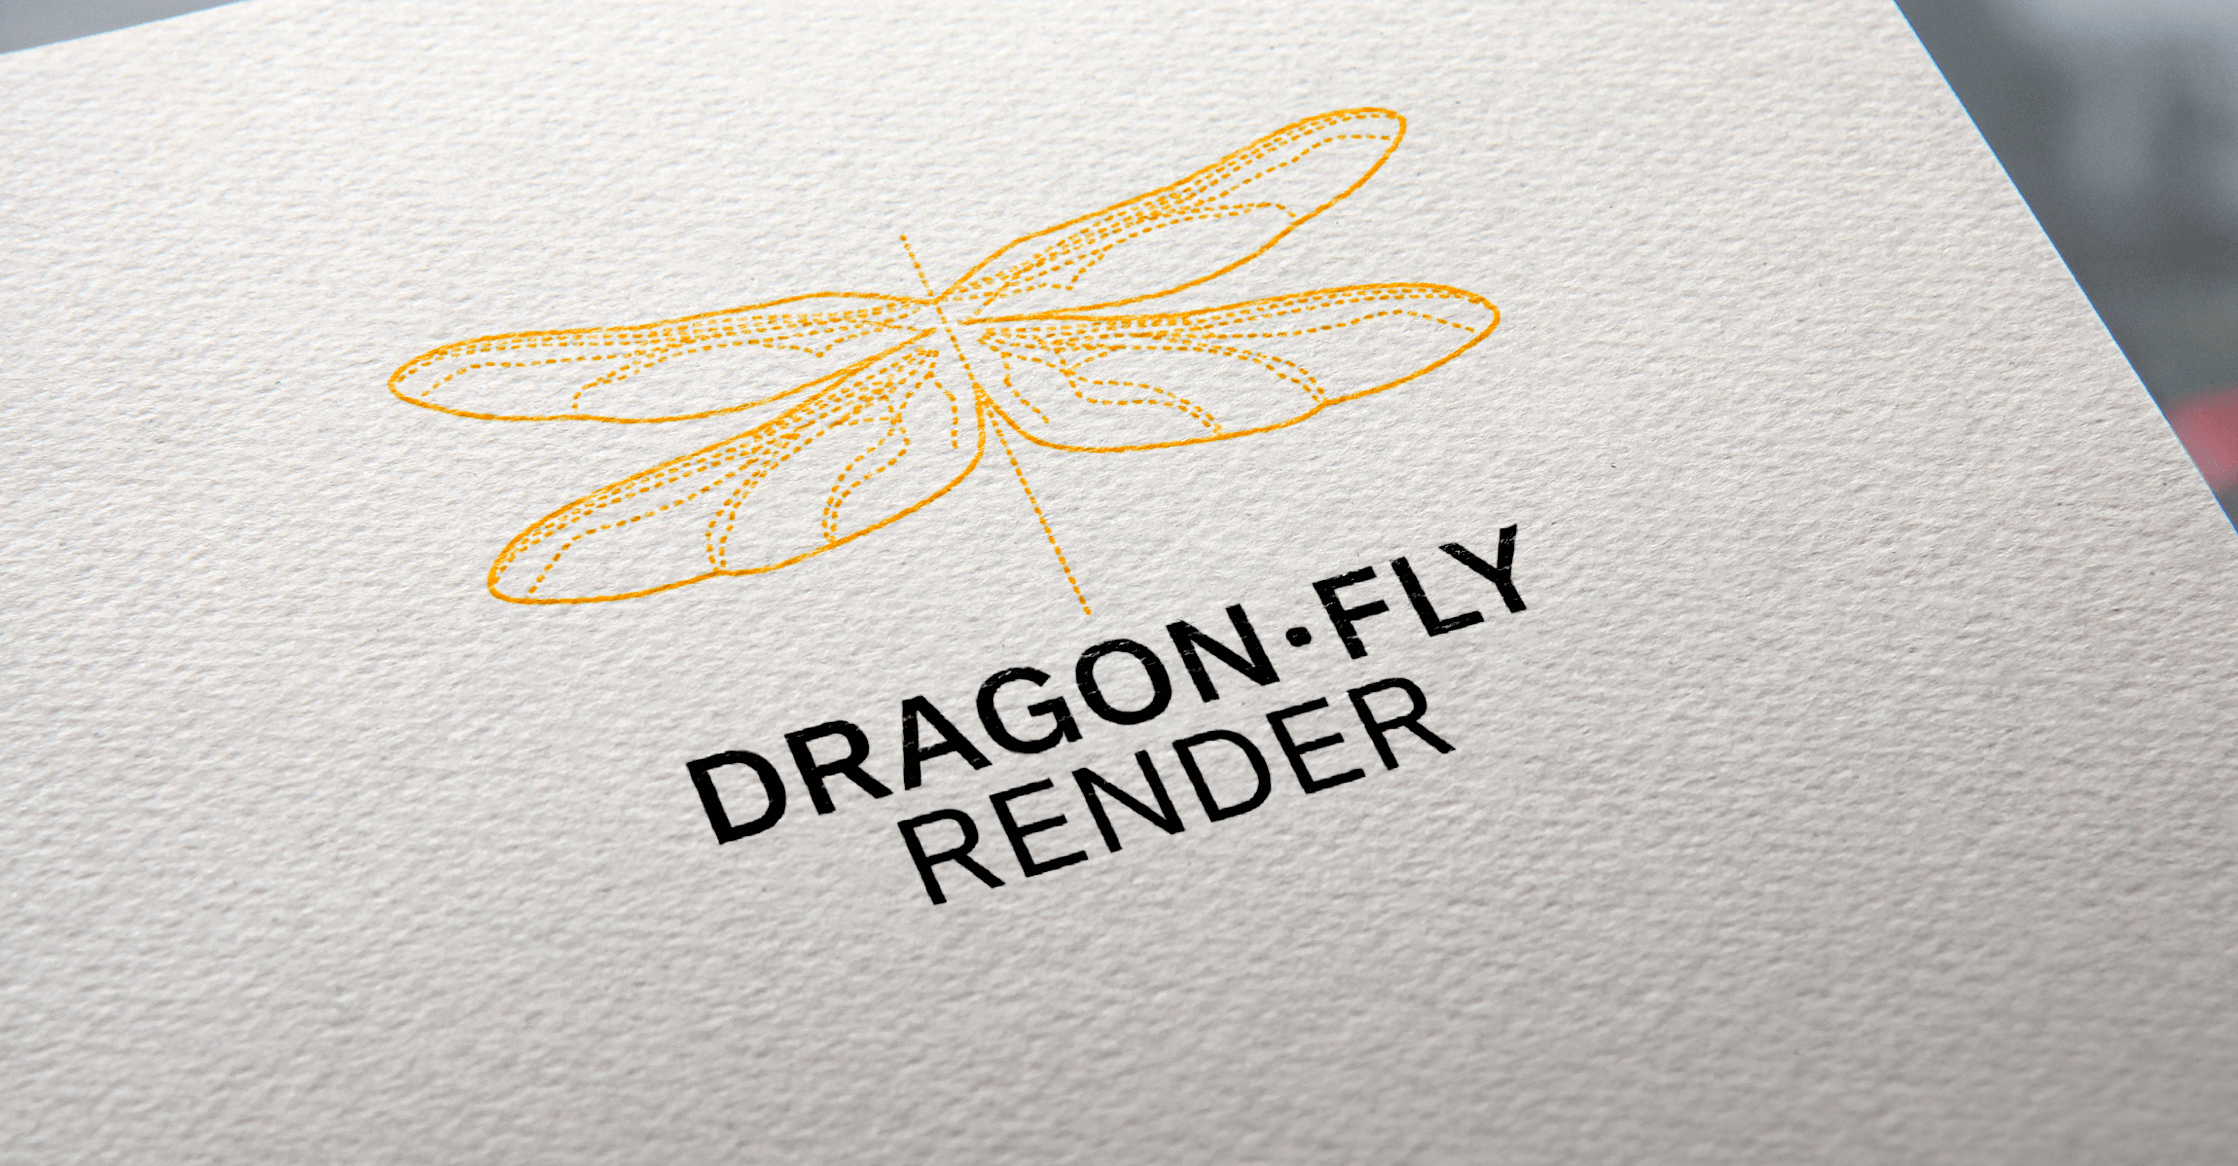 Dragon-fly Render